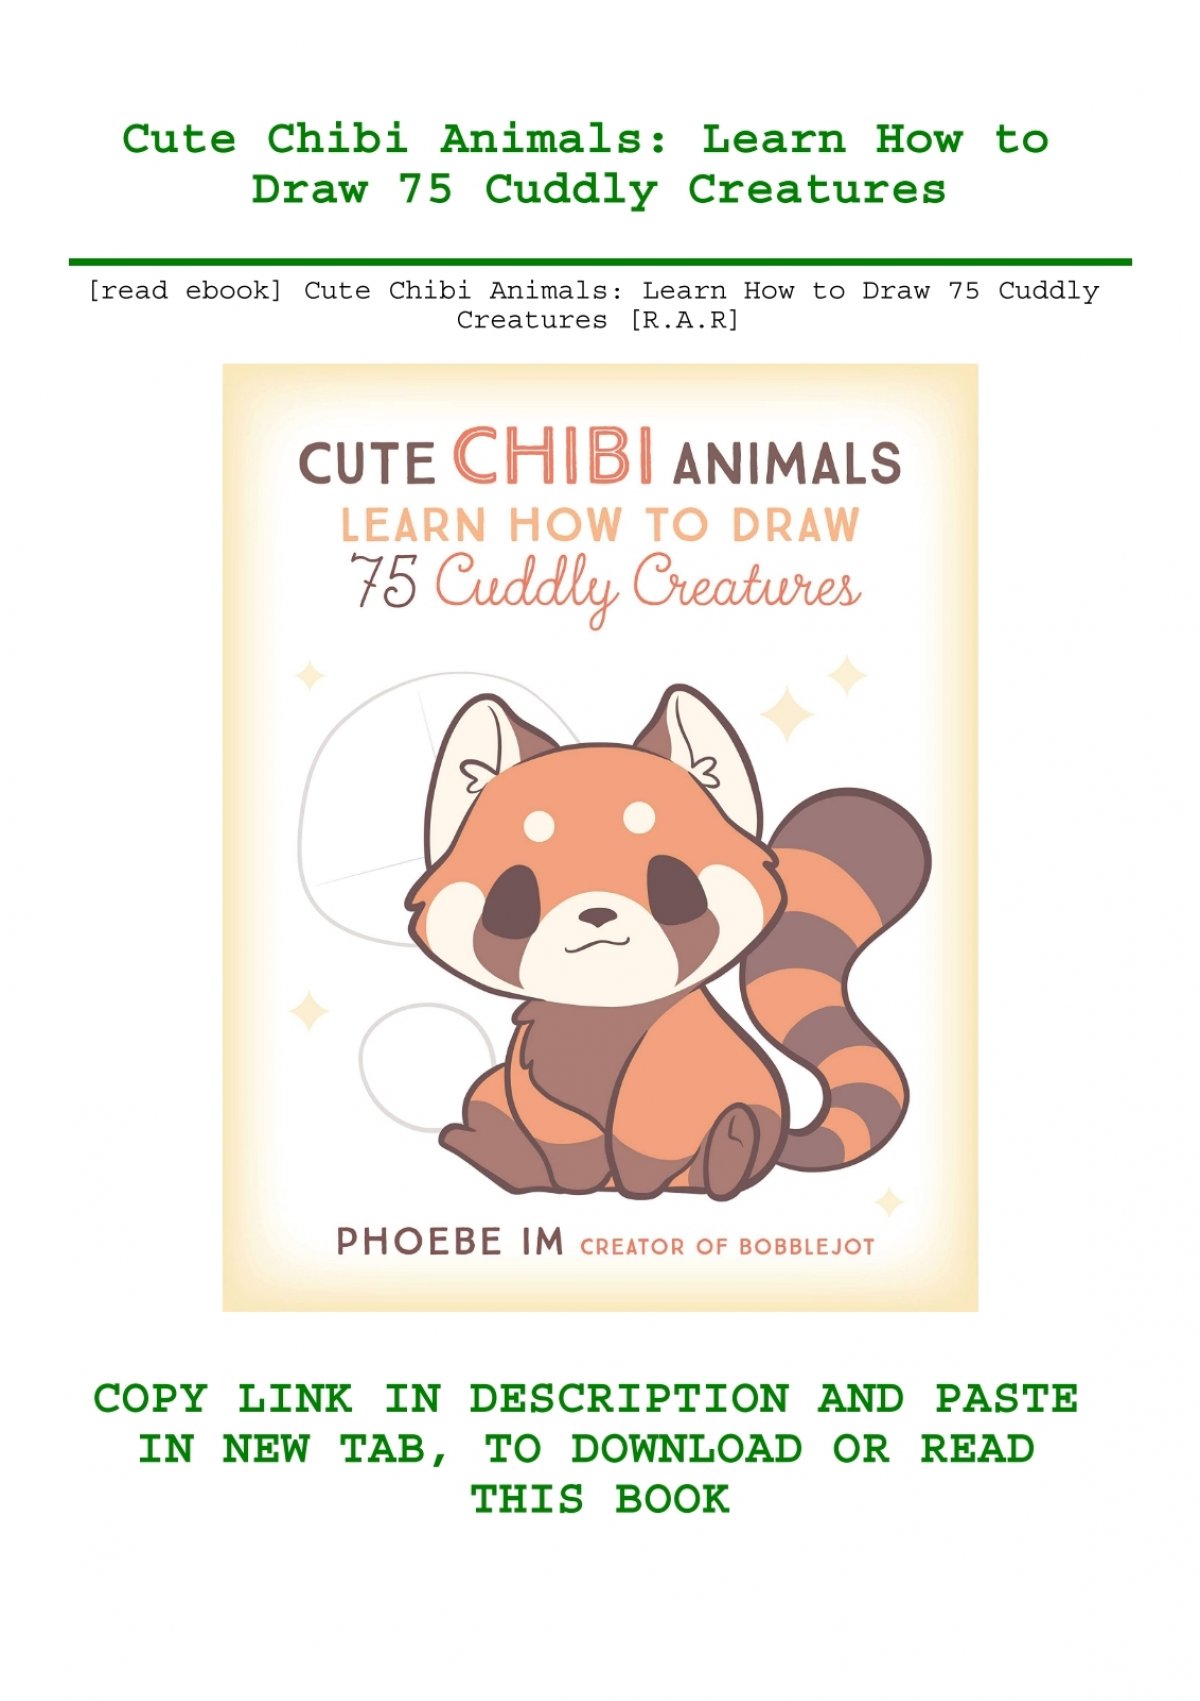 read ebook] Cute Chibi Animals Learn How to Draw 75 Cuddly ...